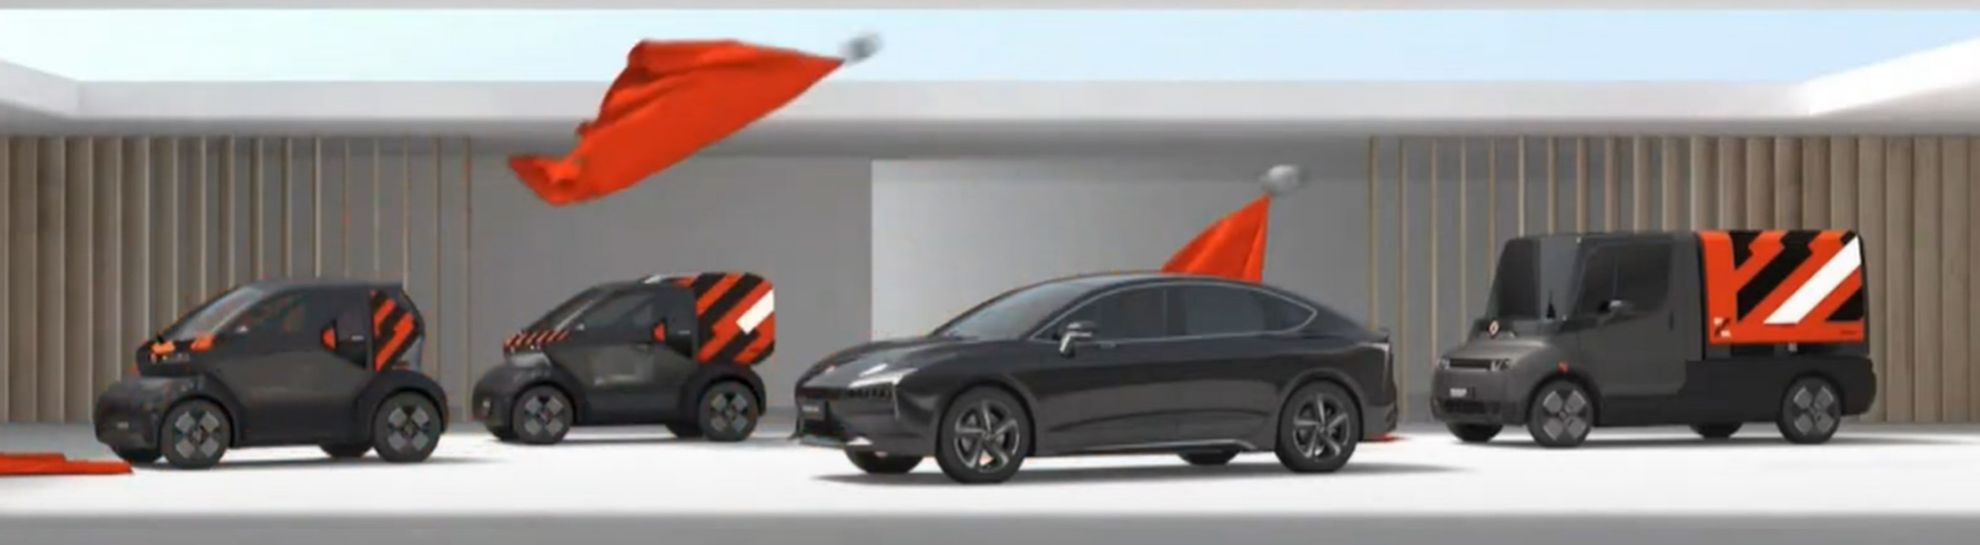 Mobilize - Renault - Hippo - carsharing - coche compartido - ultima milla - Bento - Duo